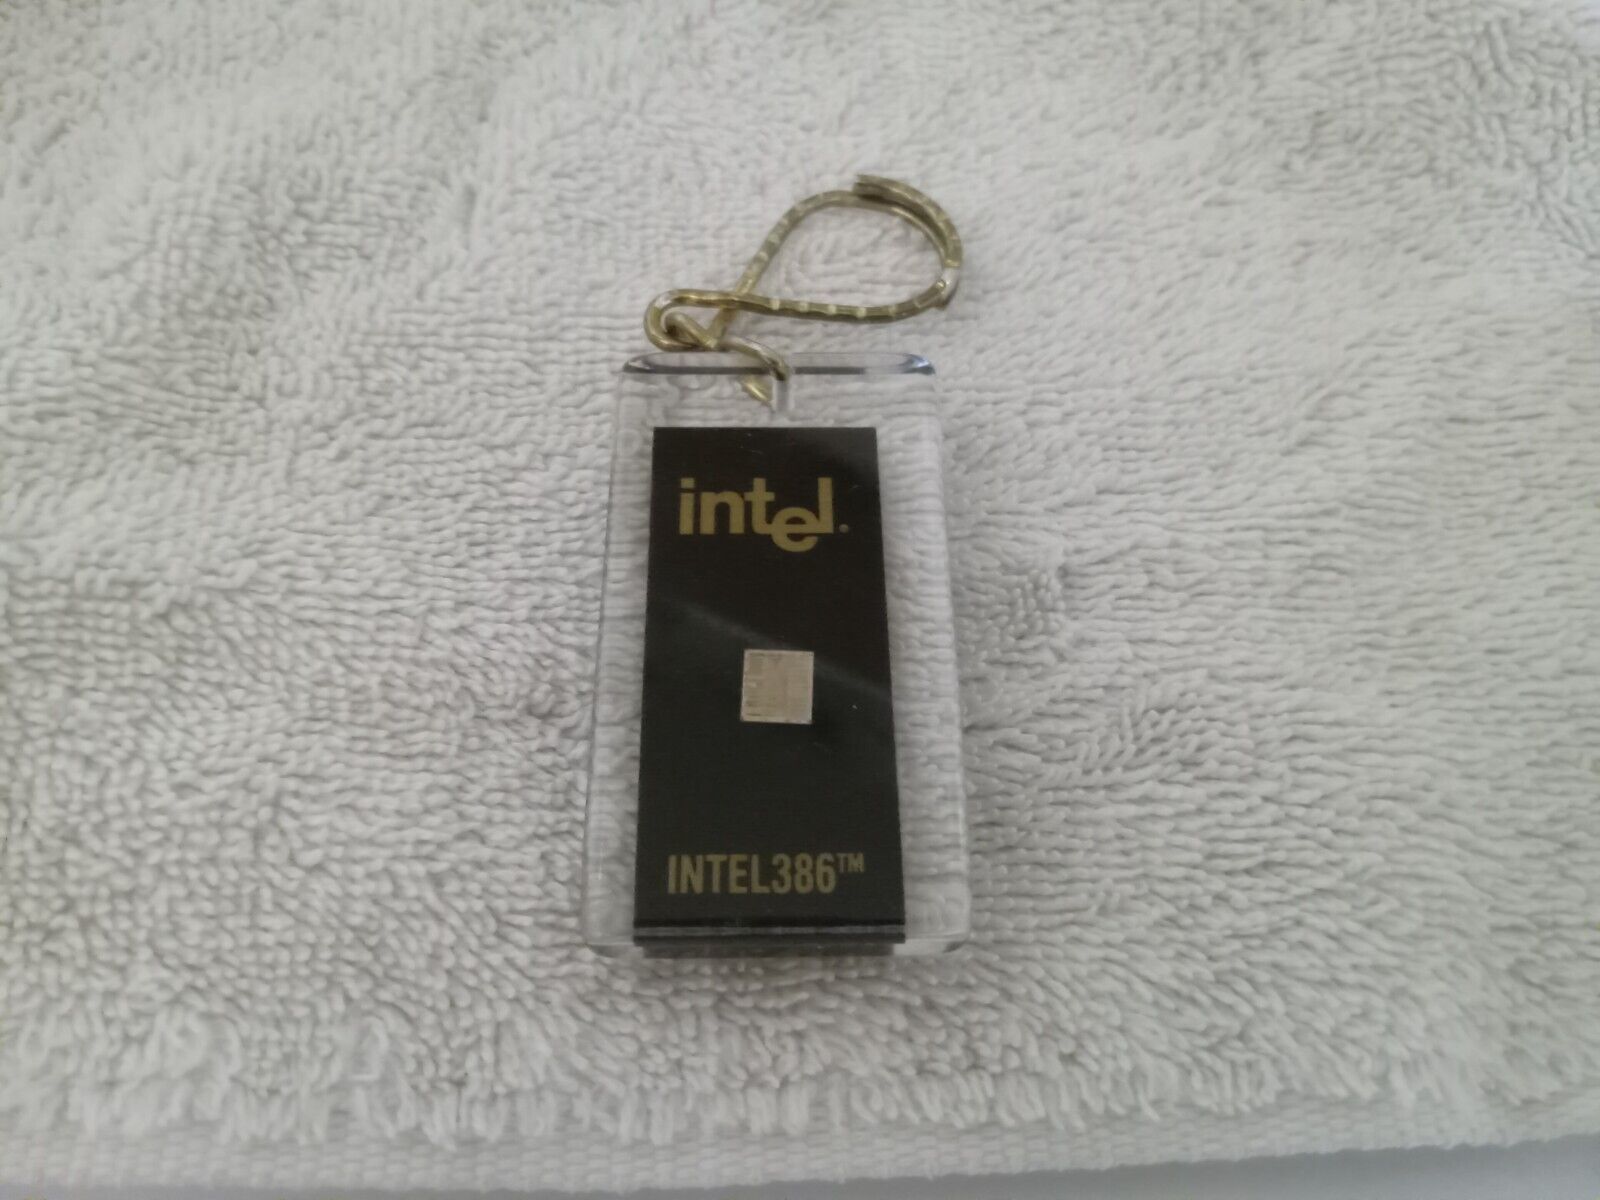 Intel 386 486 Chip Rare Vintage Collectible Keychain memorabilia Commemorative